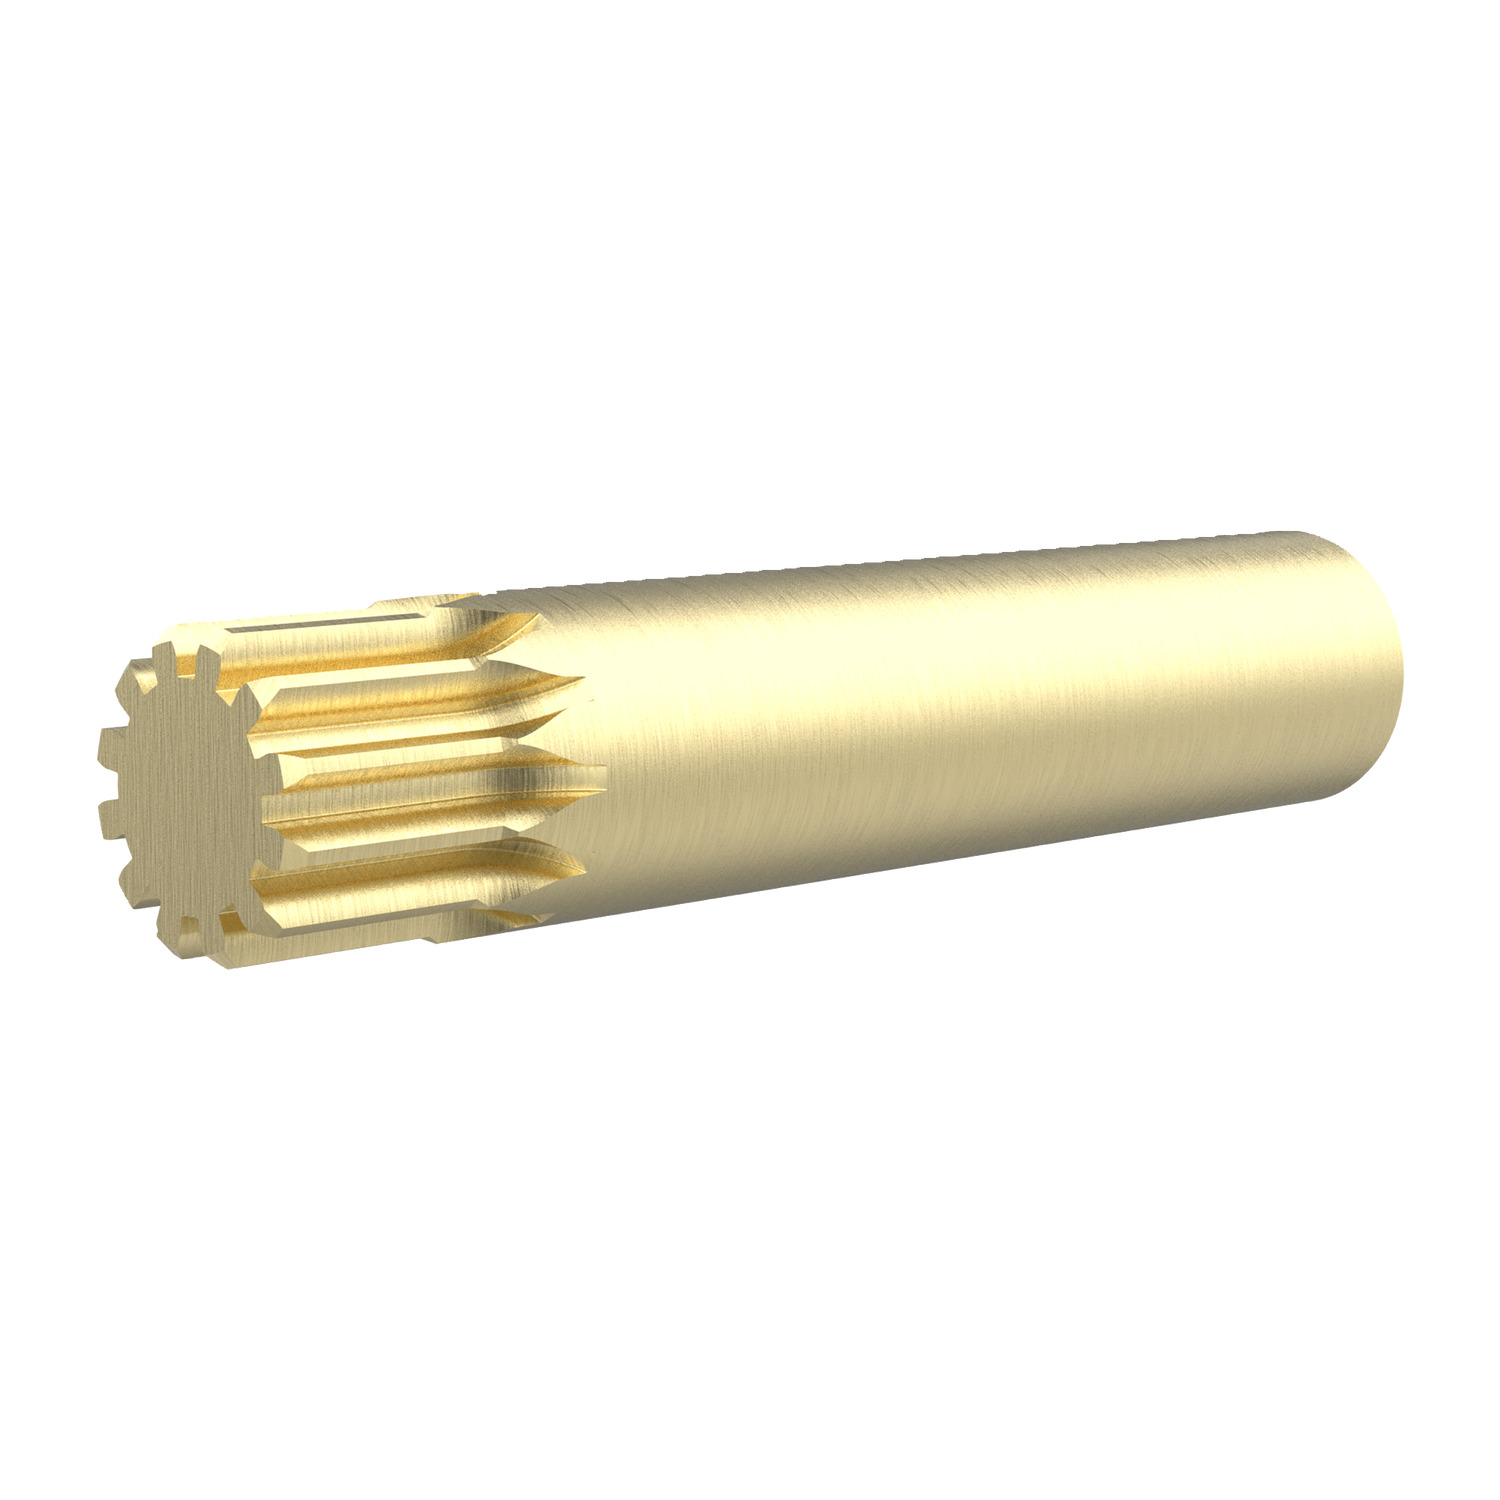 R5130.075-012 Spur Gear - Mod. 0.75 - 12 teeth - brass 